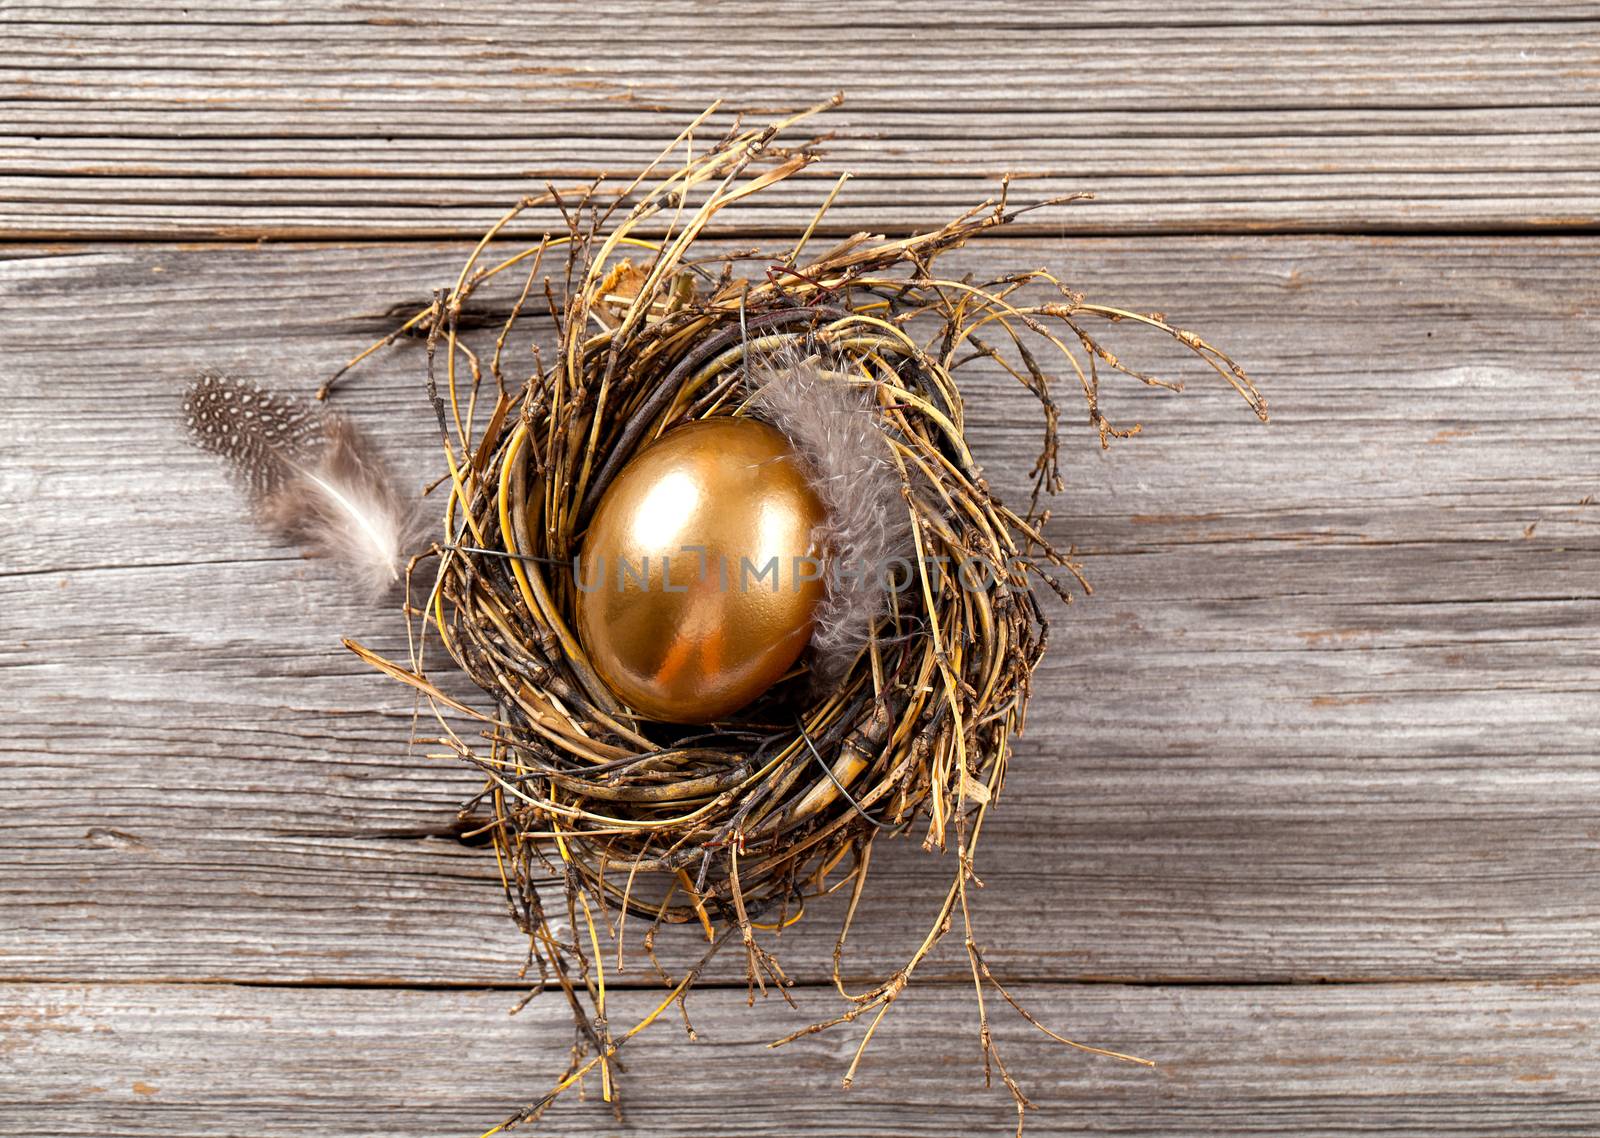 Golden egg in nest on dark vintage wooden background by motorolka